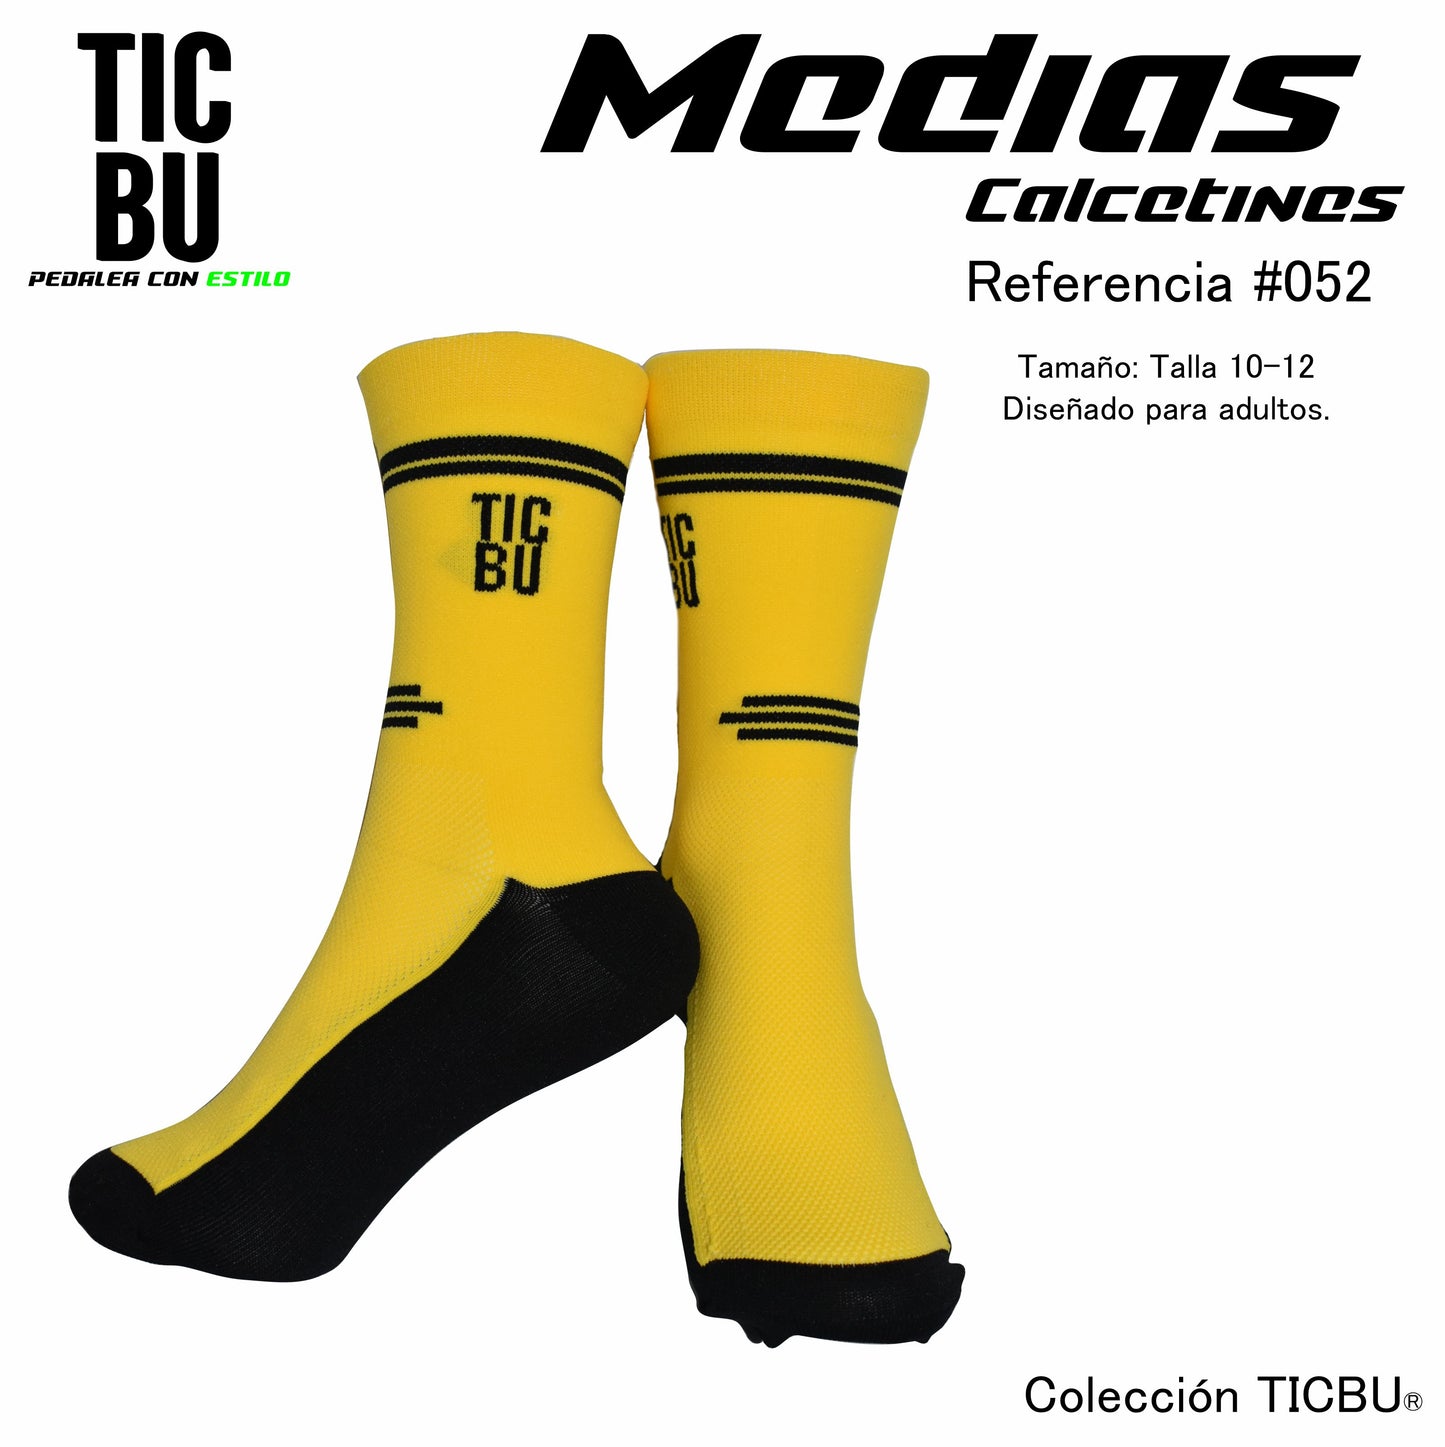 TICBU socks Ref 052